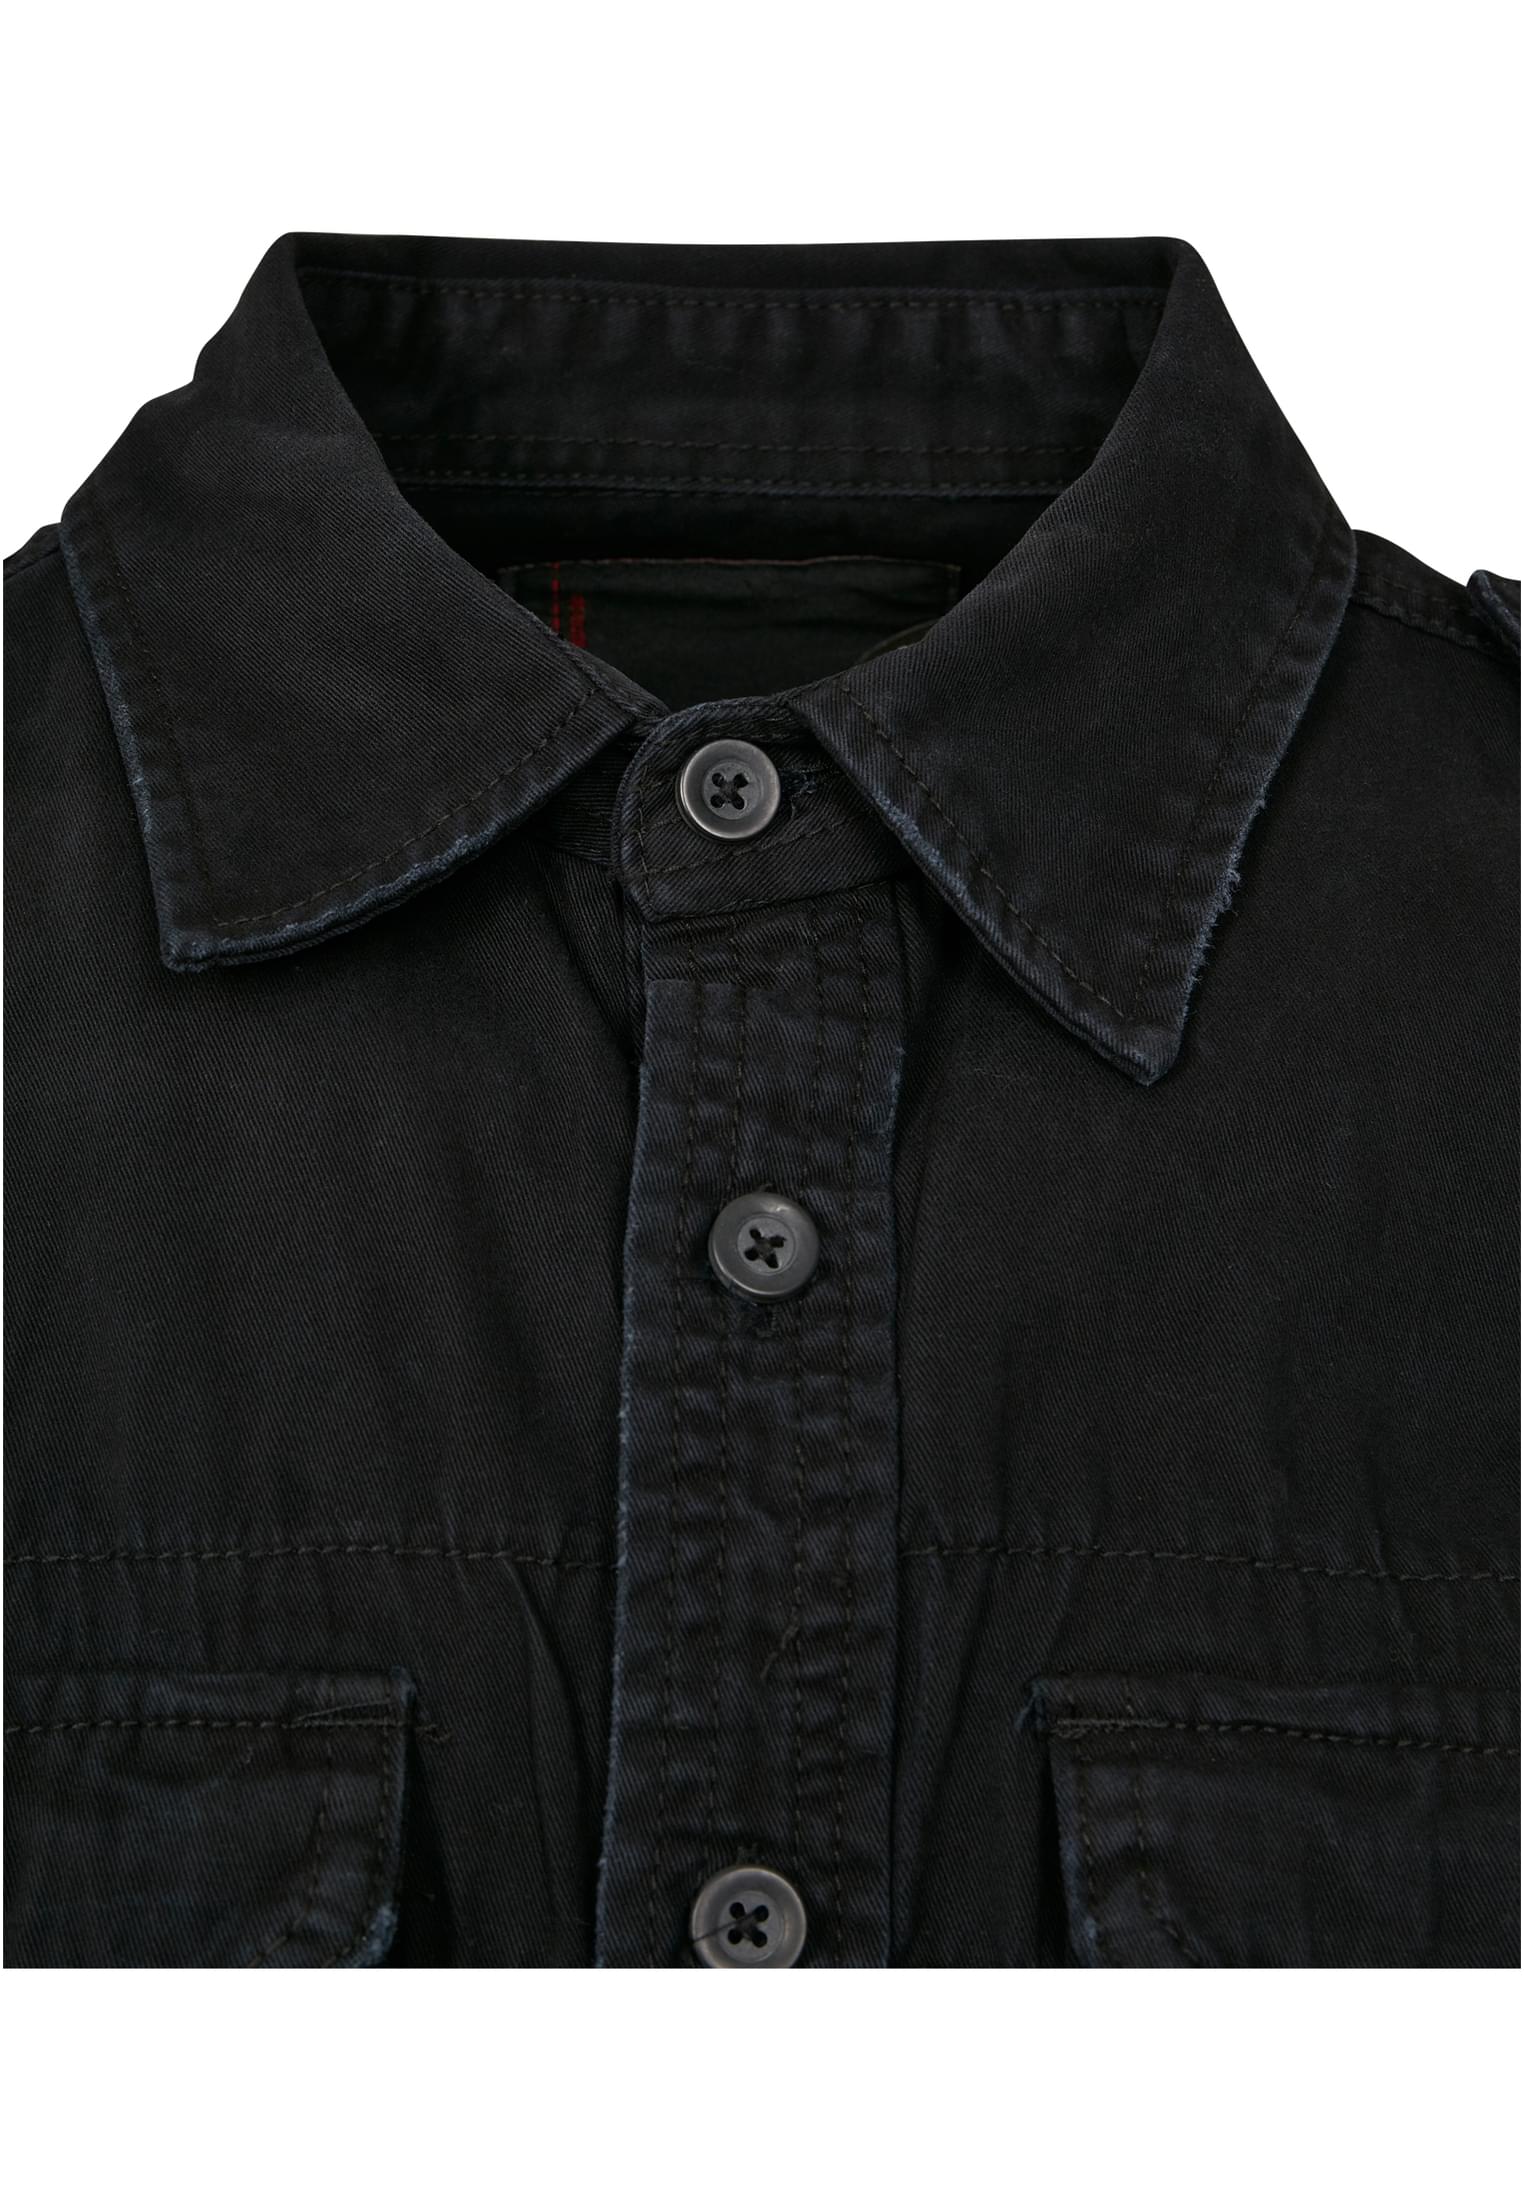 Hemden Vintage Shirt in Farbe black